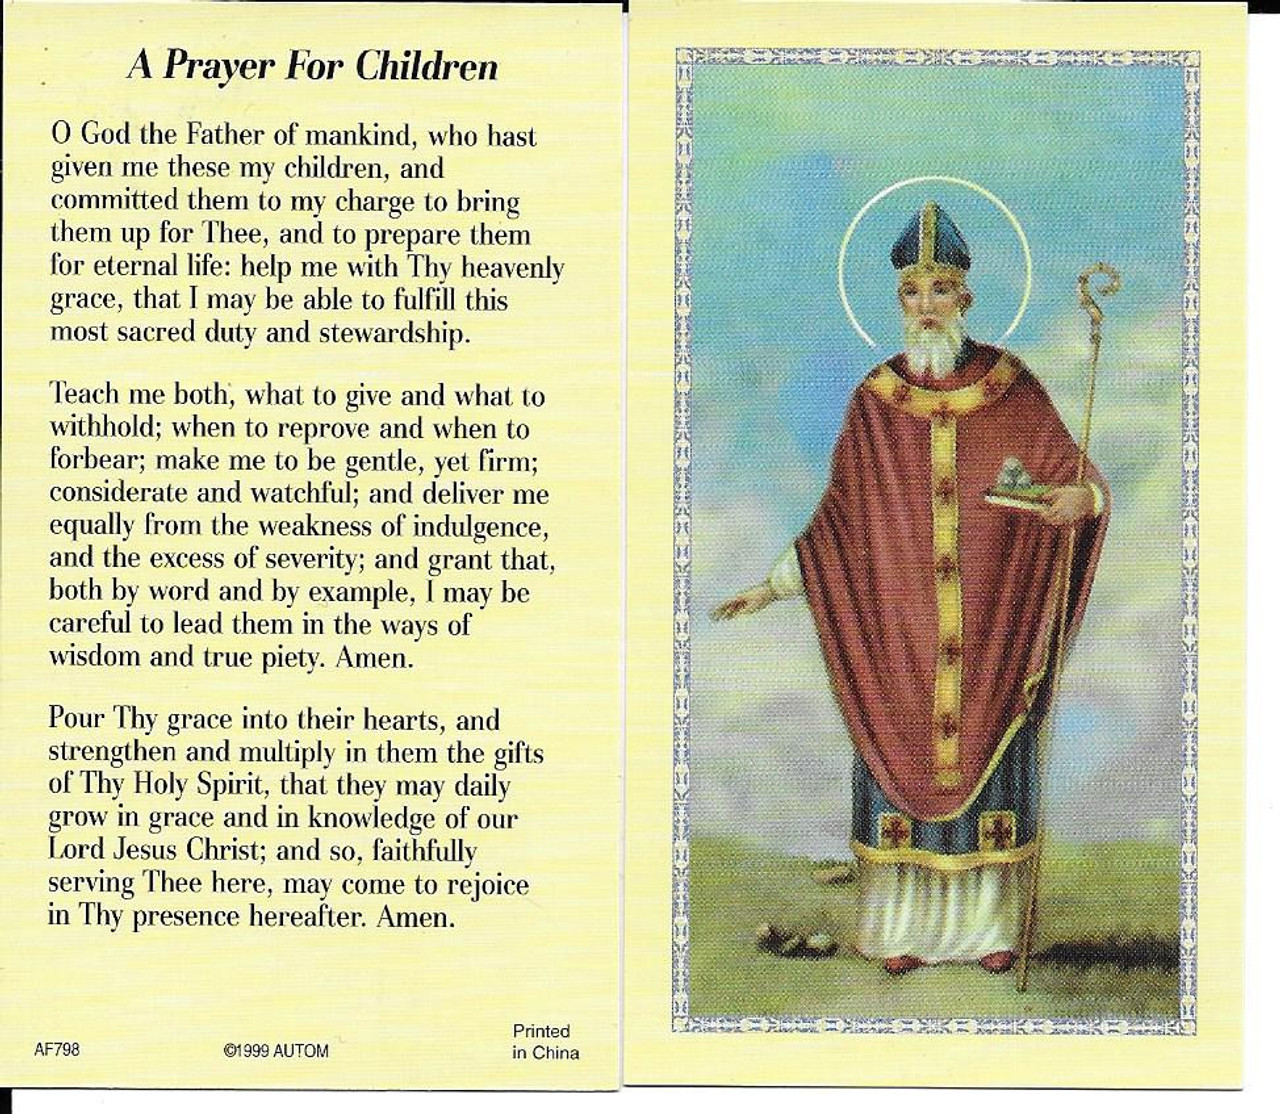 50 cent Prayer Cards of “A Prayer For Children”